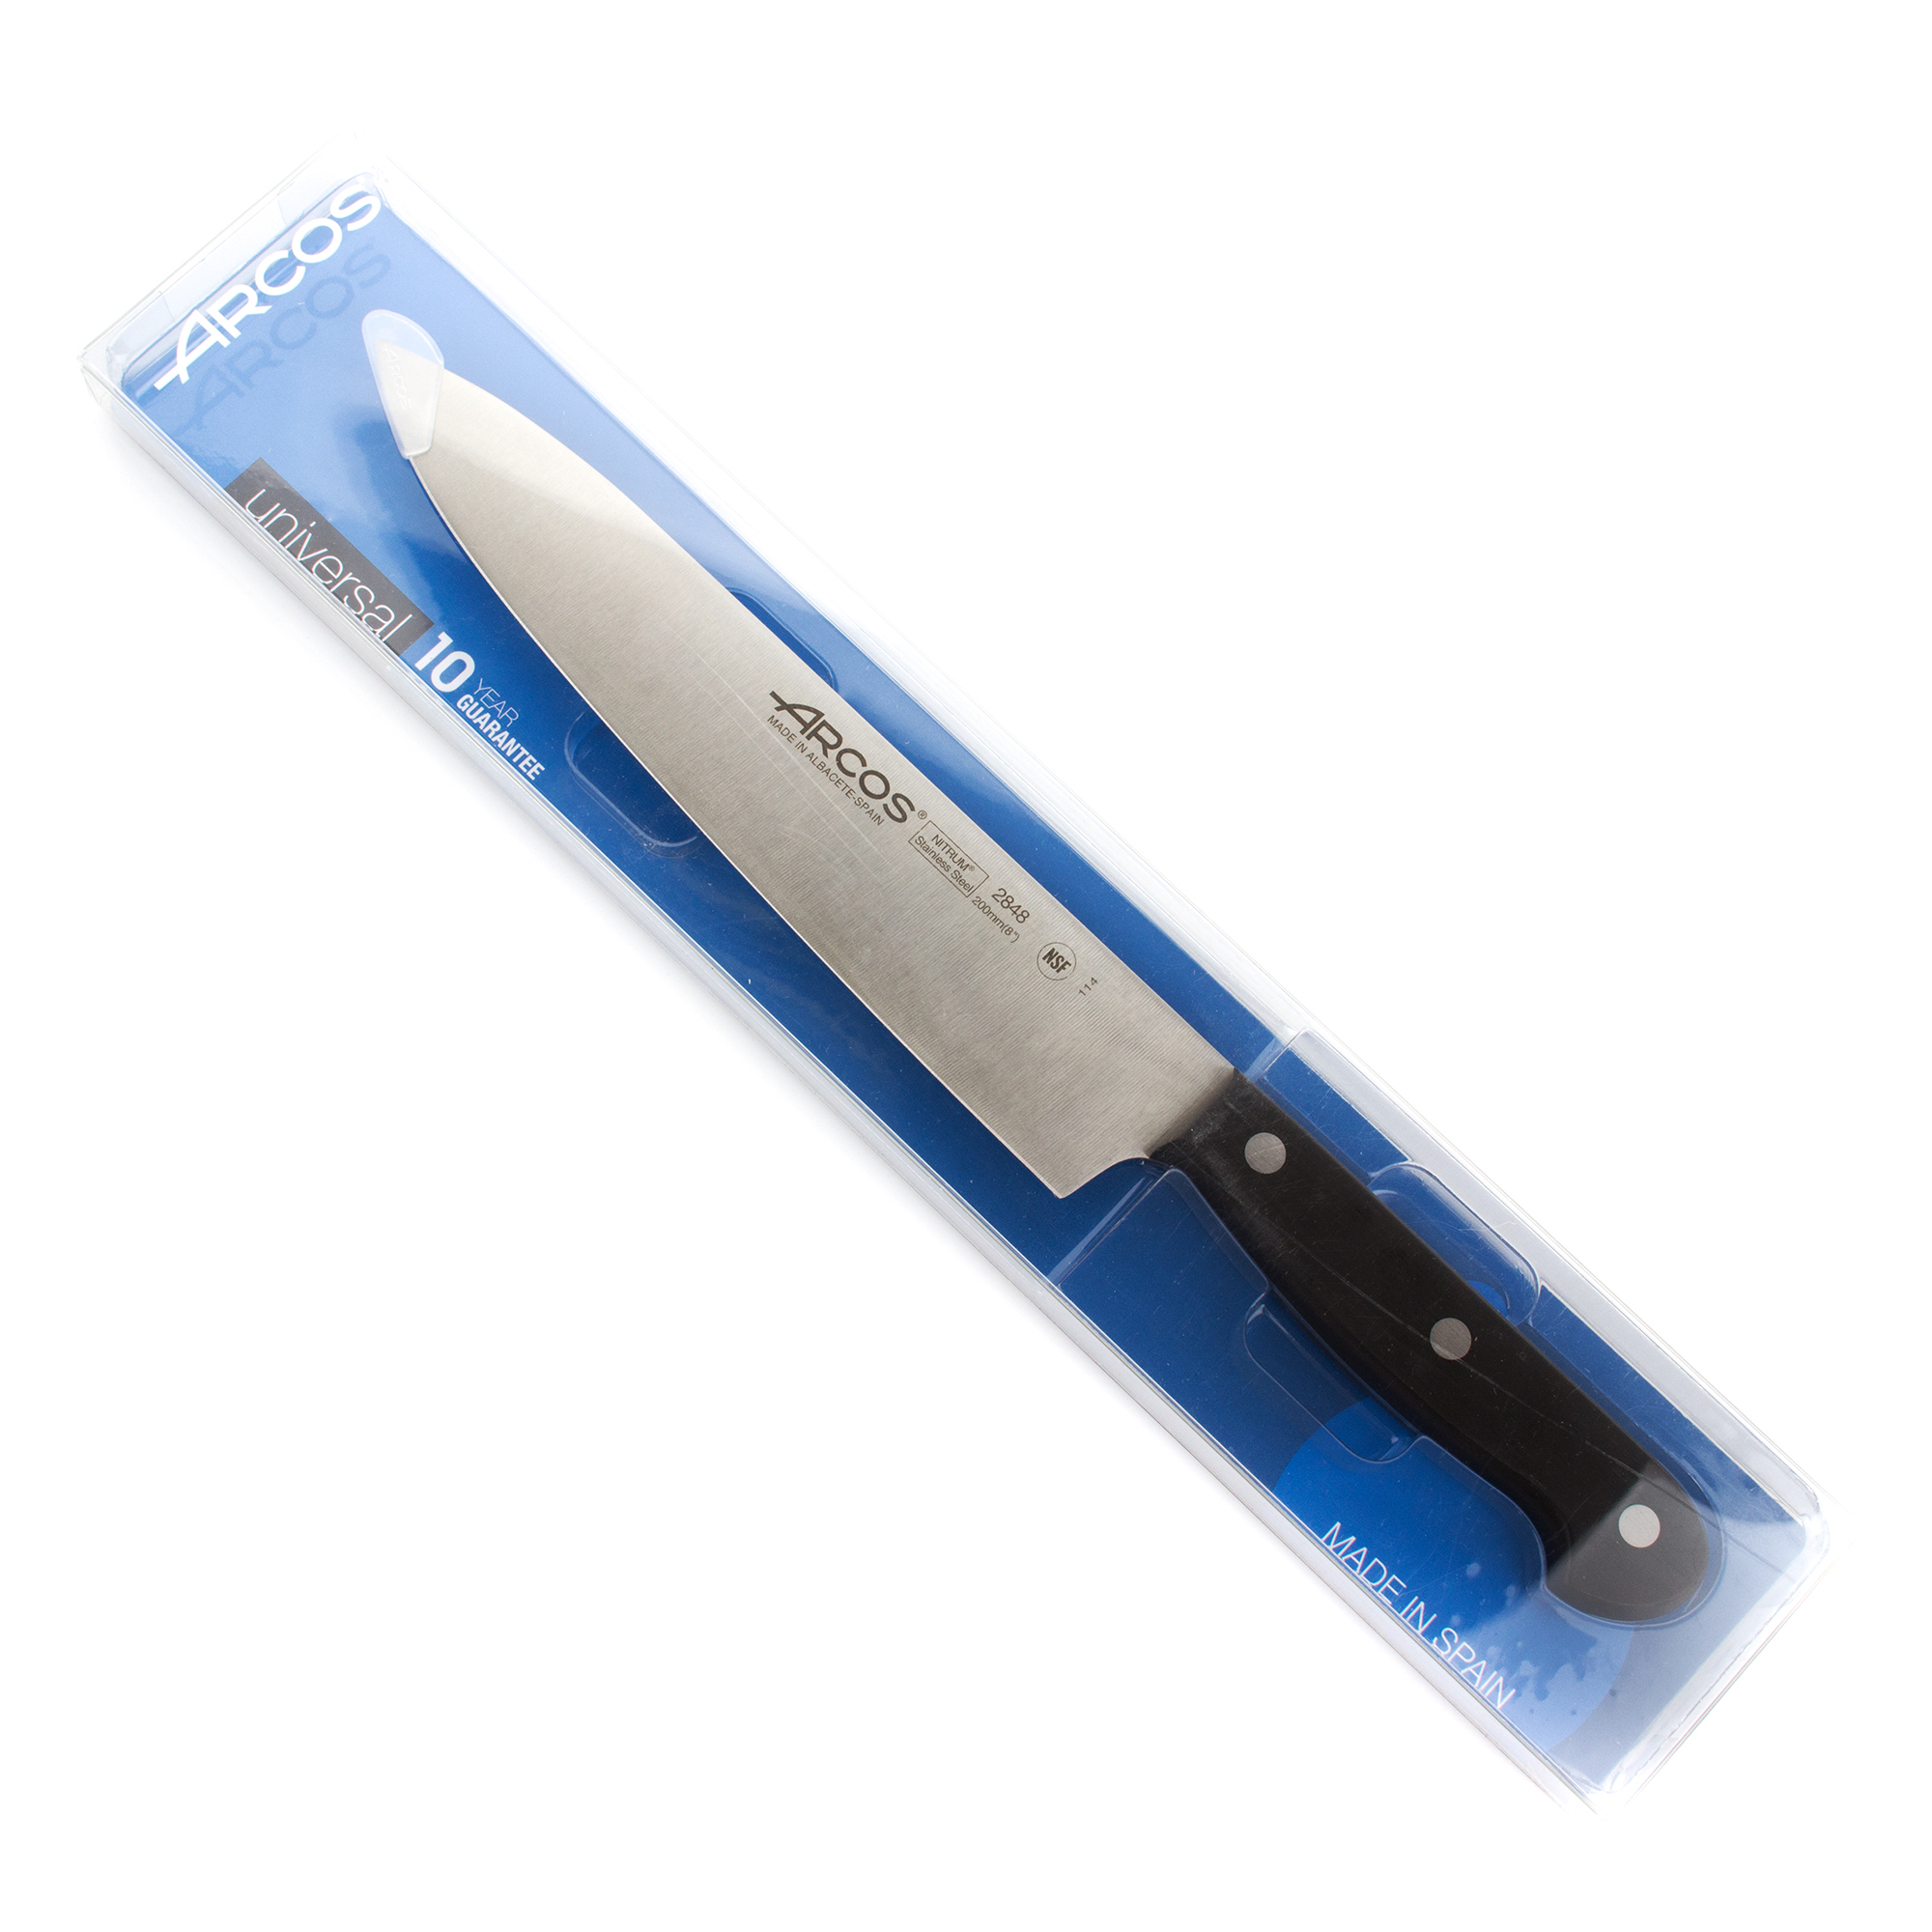 Нож кухонный Шеф 20 см ARCOS Universal арт. 2848-B